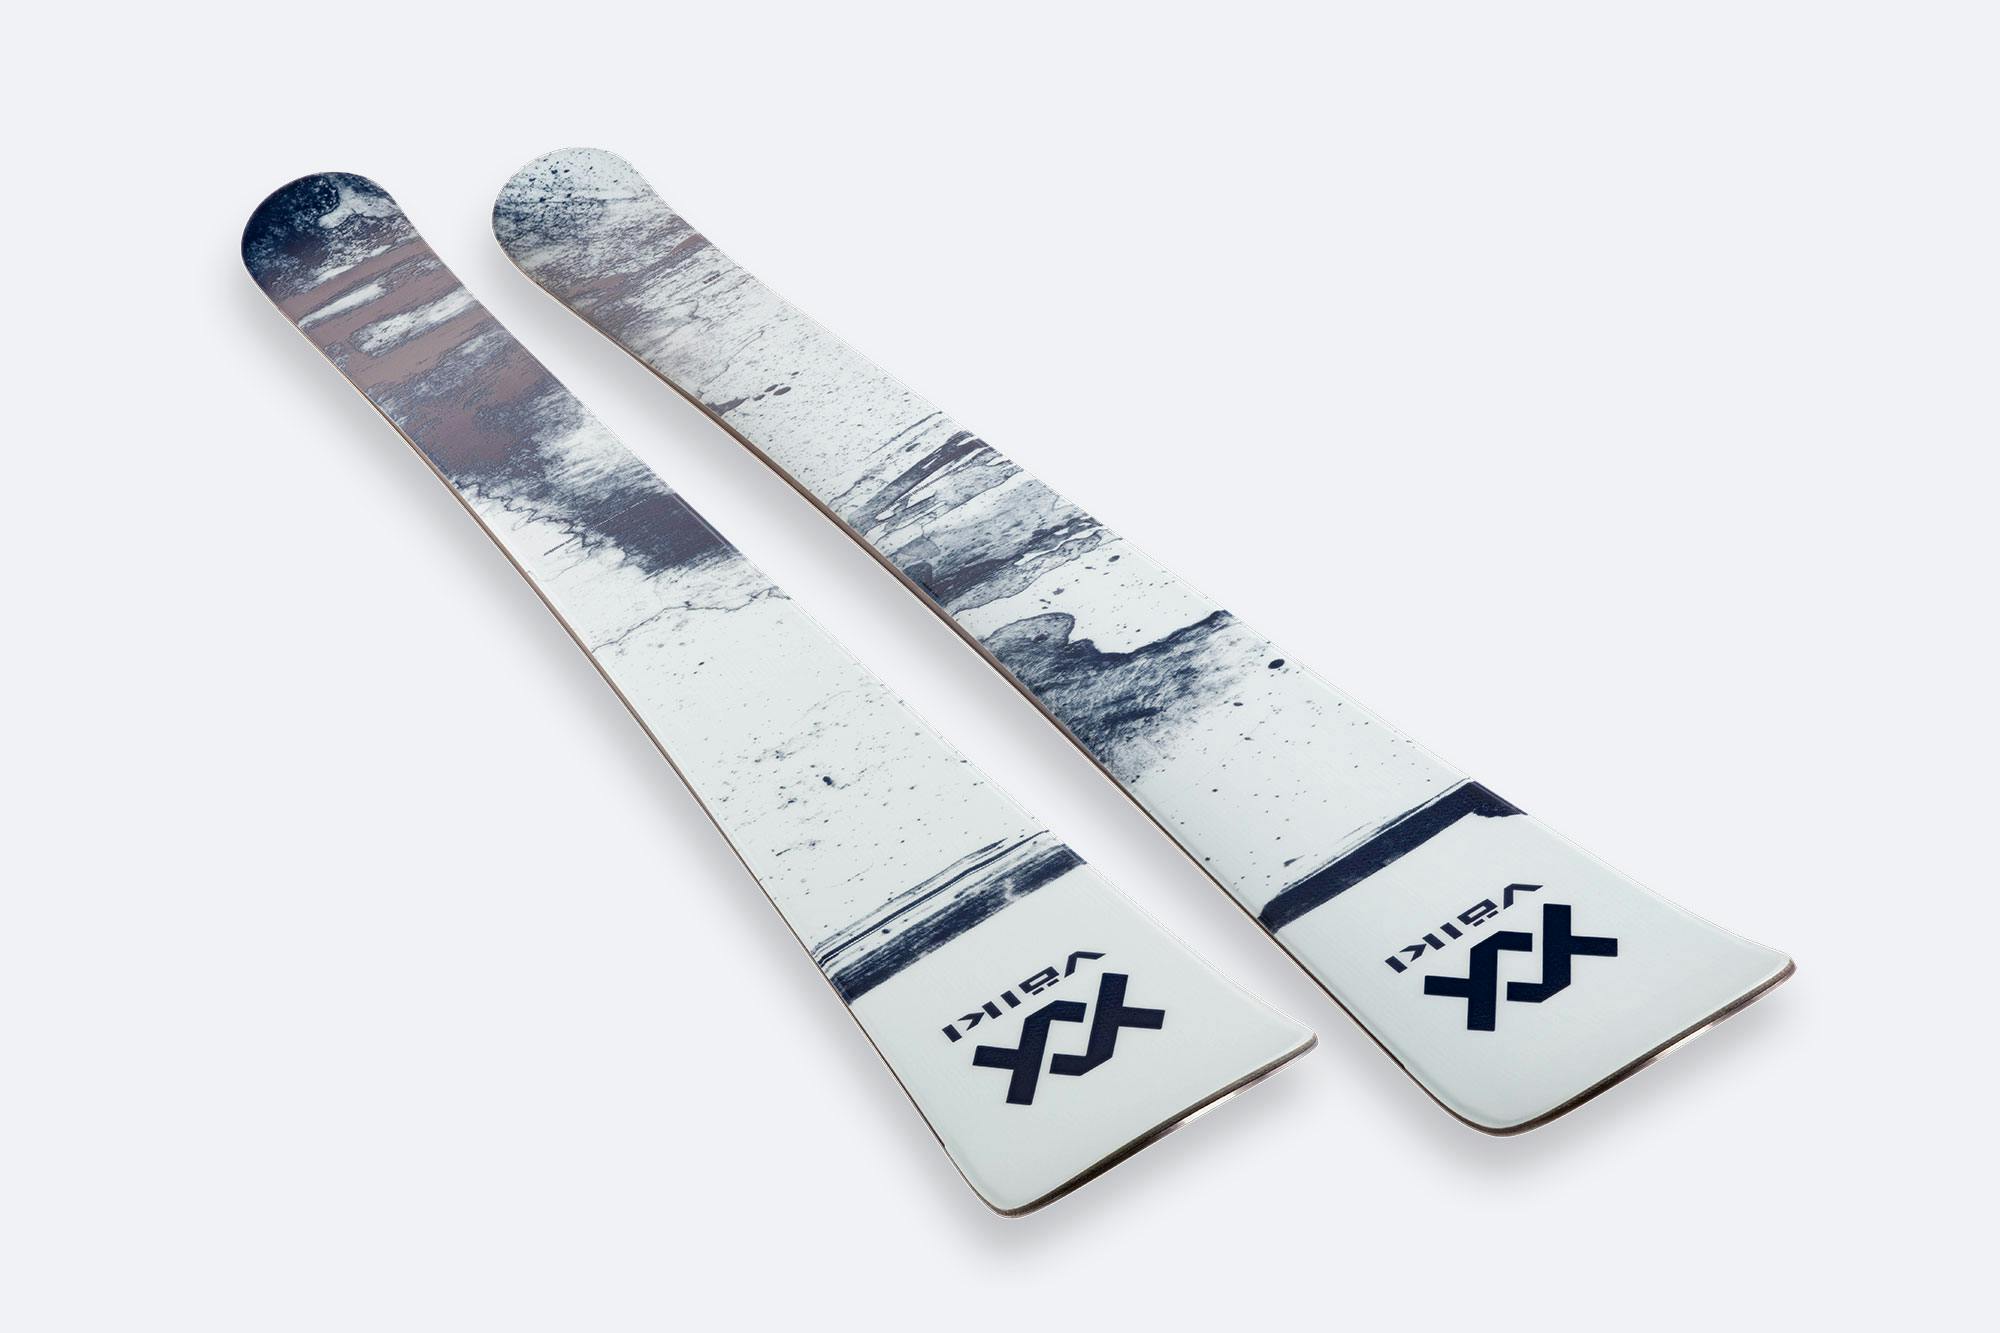 Völkl Revolt 95 Skis · 2023 · 173 cm